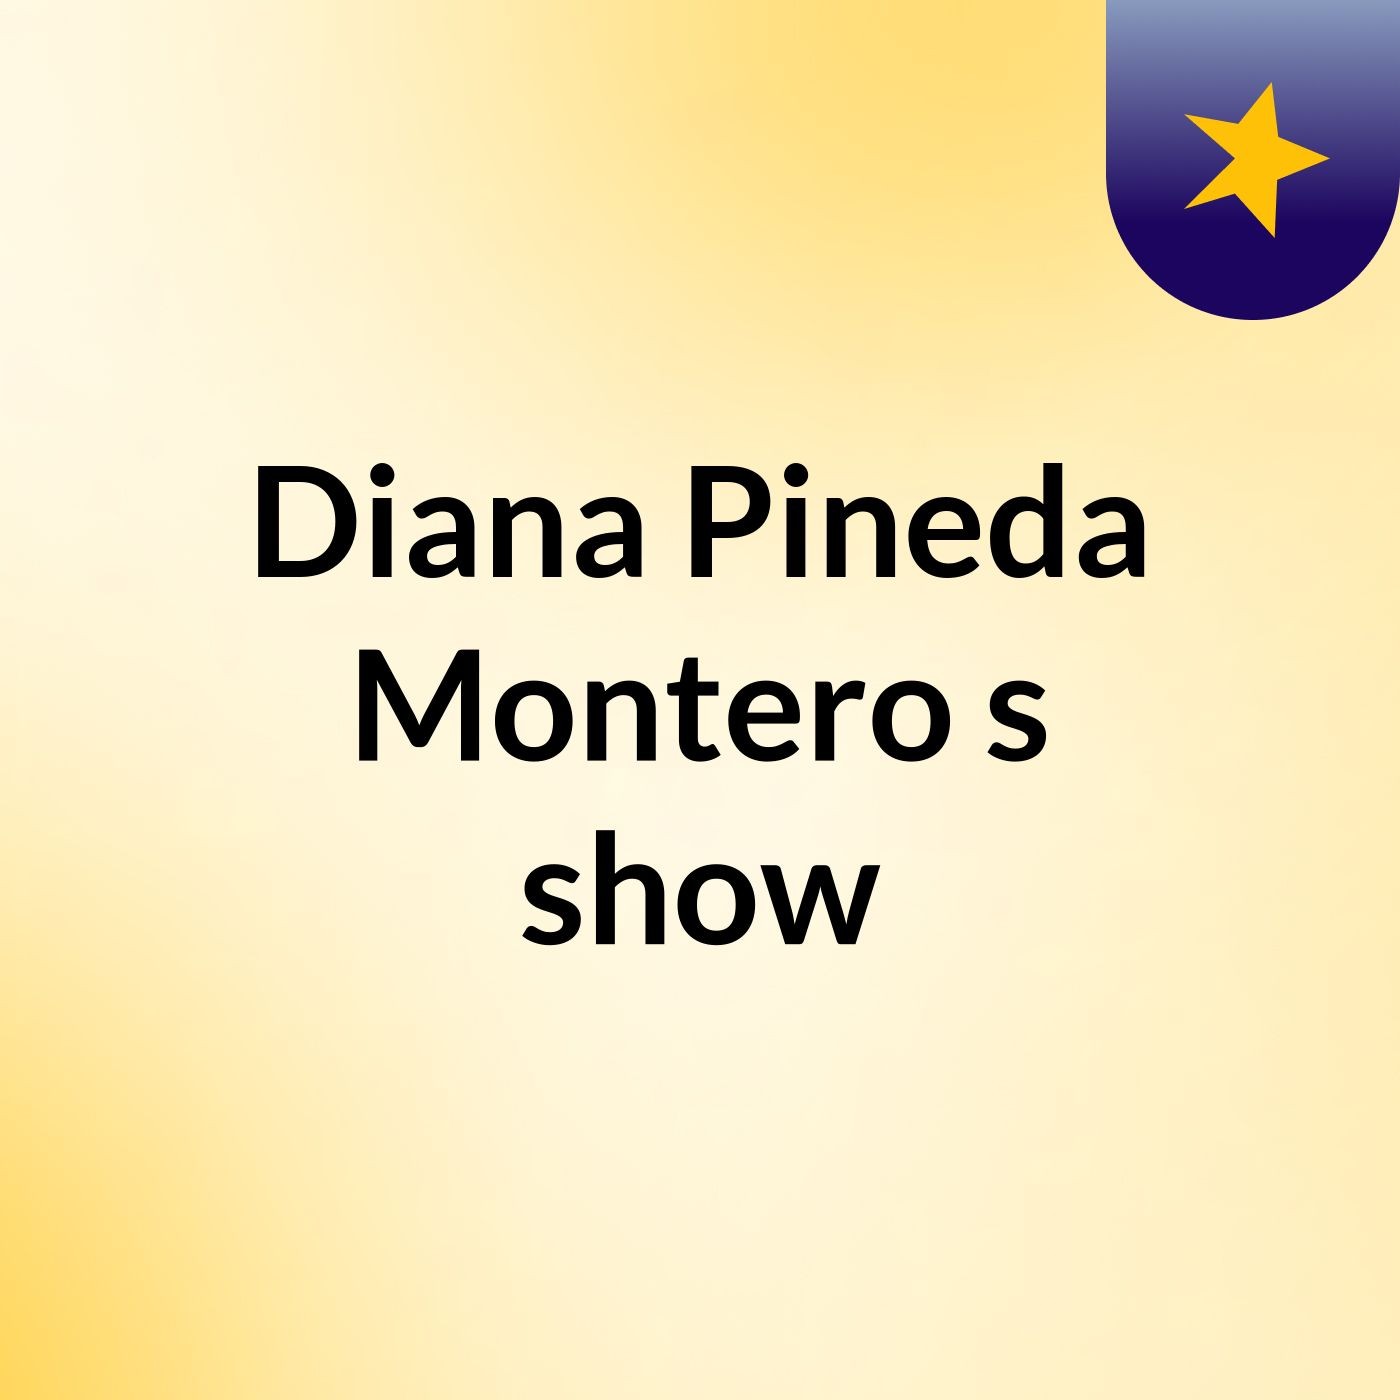 Diana Pineda Montero's show